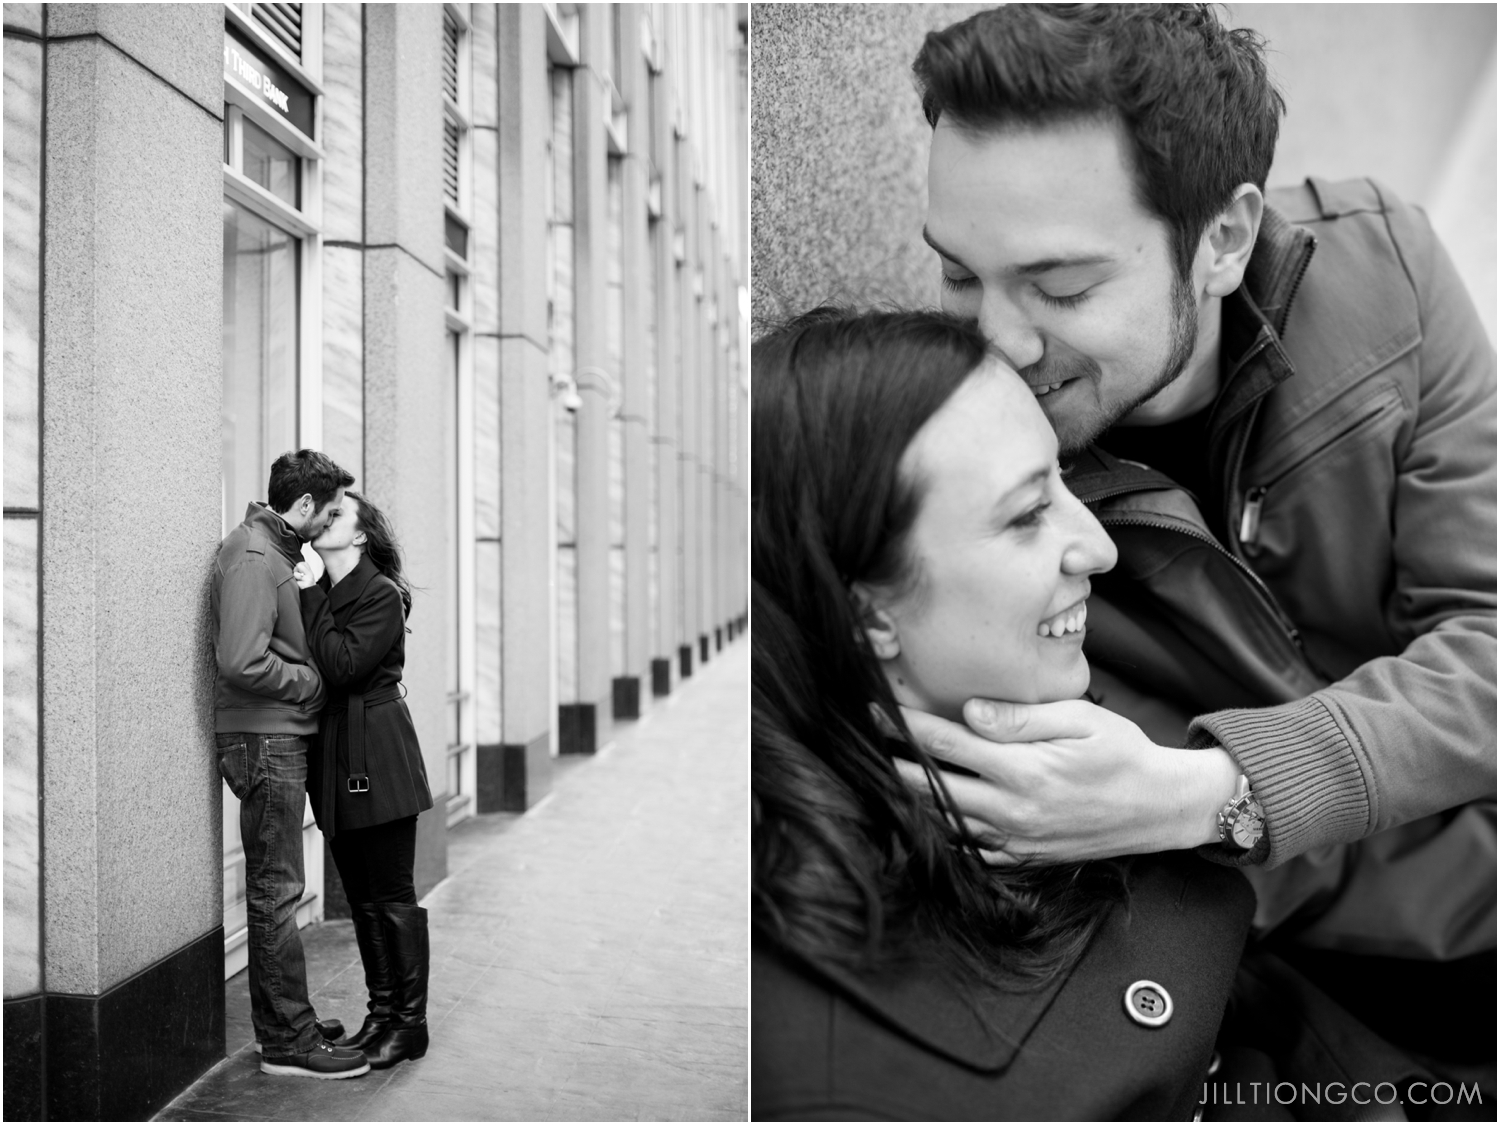 Chicago Engagement Photos | Chicago Wedding Photographer | Jill Tiongco Photography